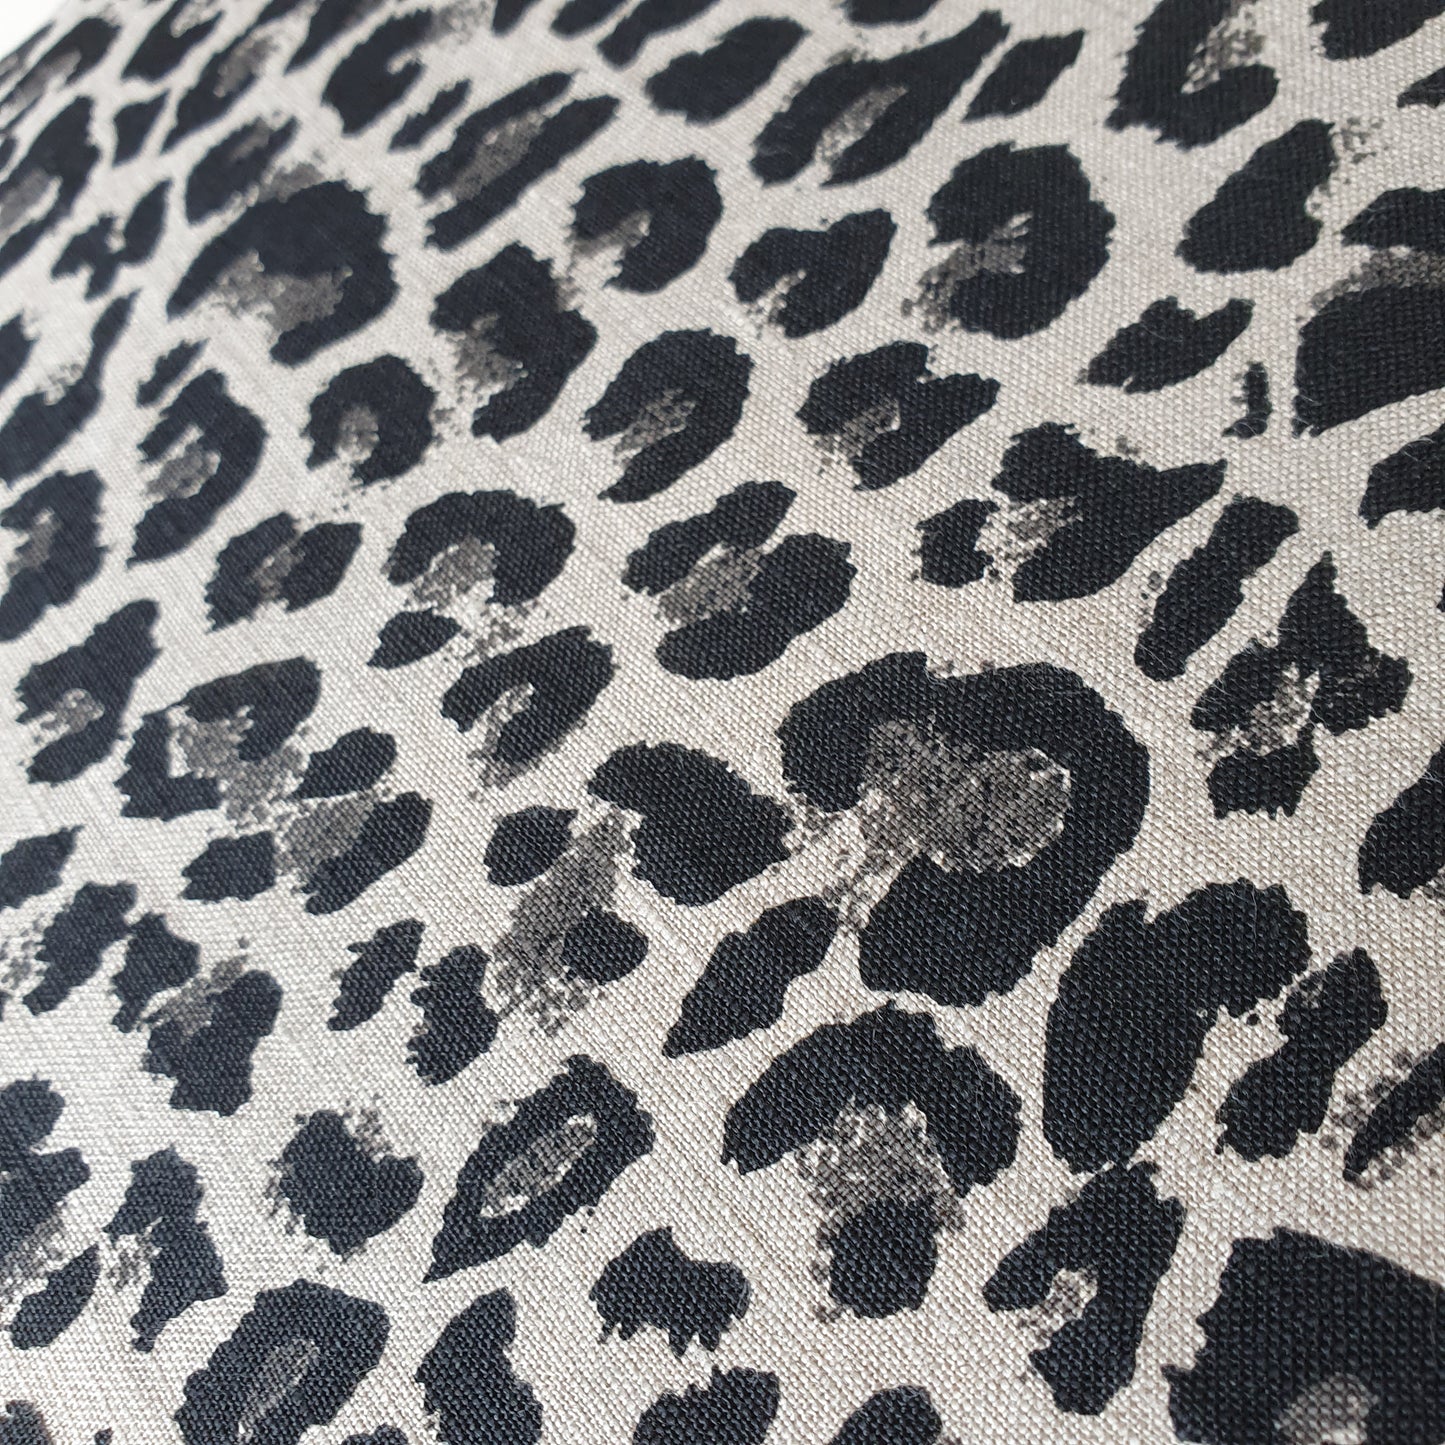 Leopard print linen ireland